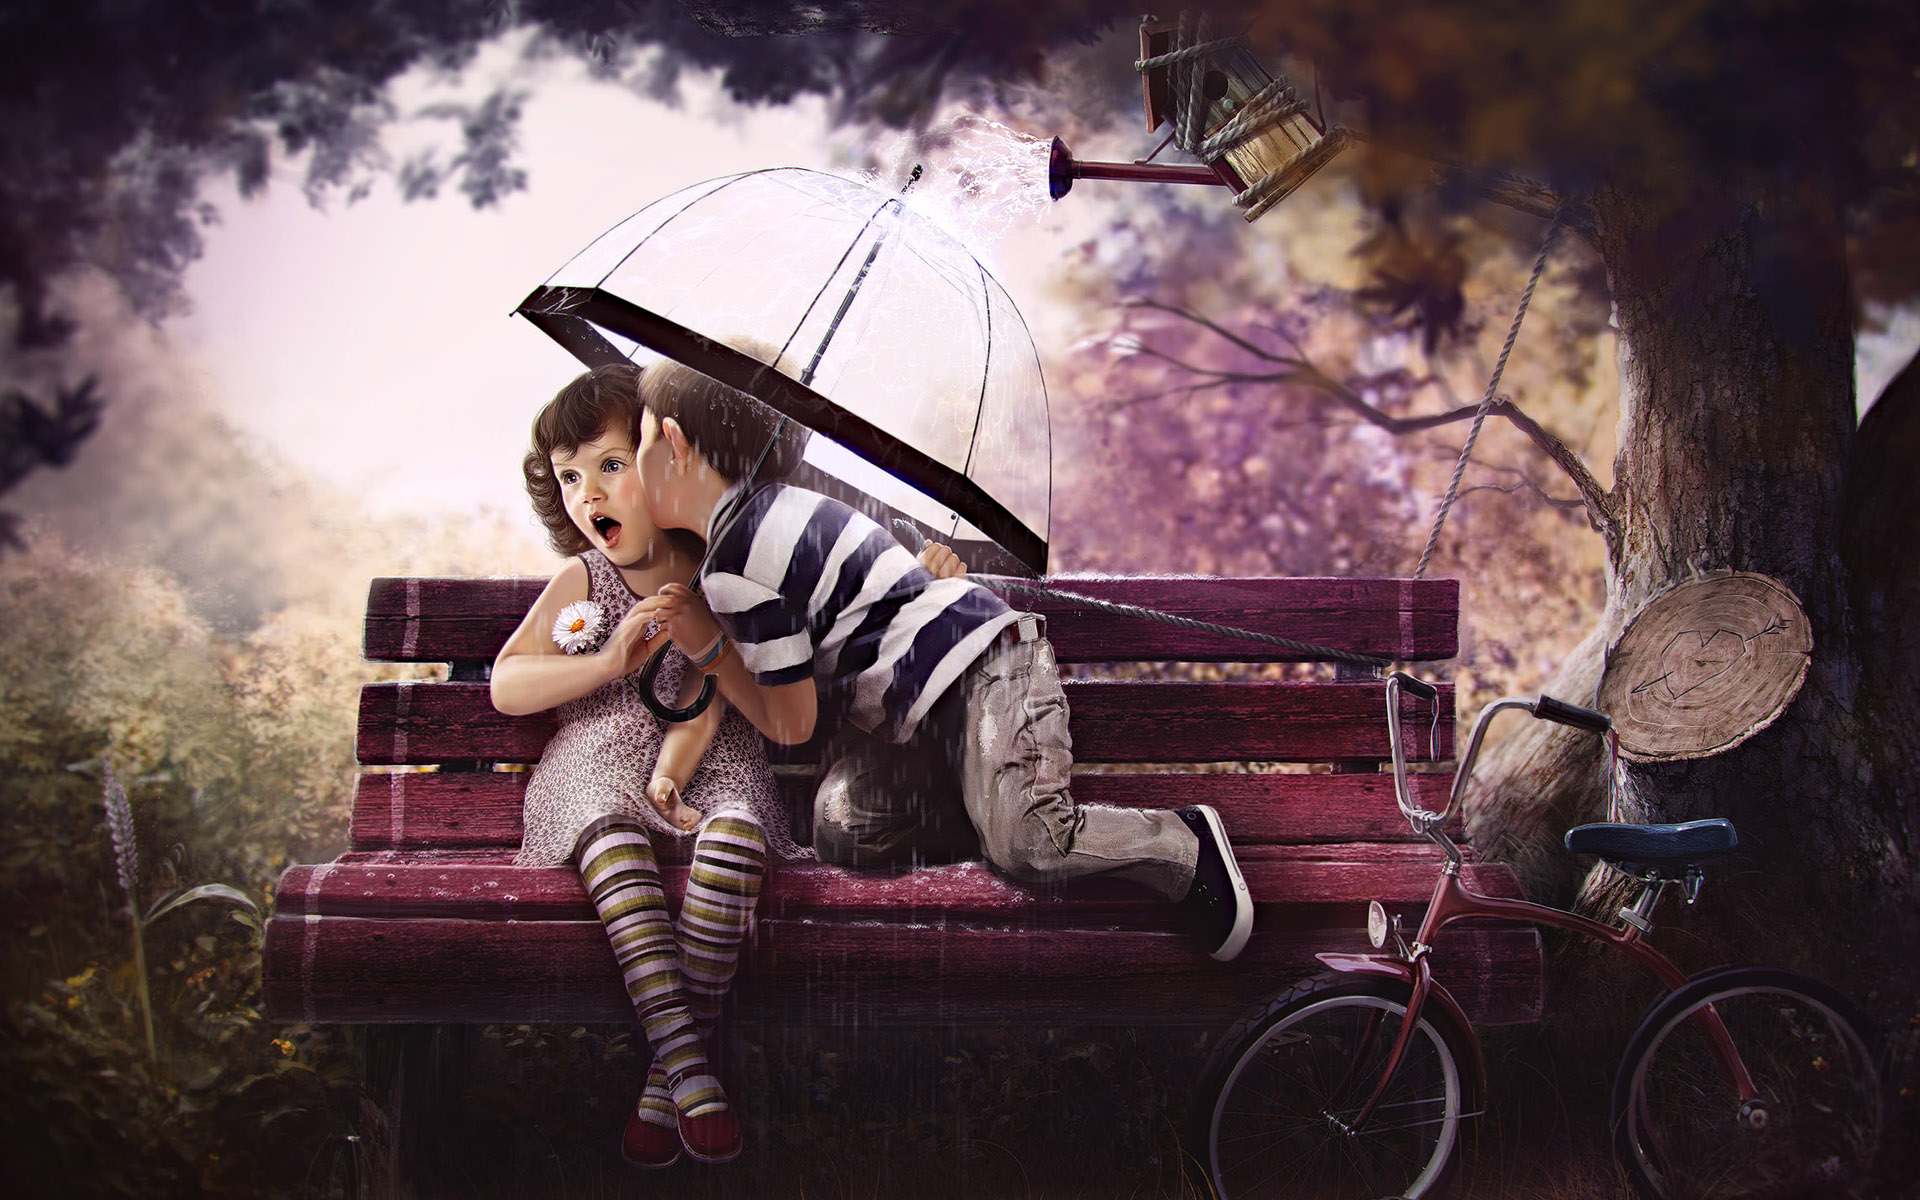 artistic, umbrella, bike, kiss, love